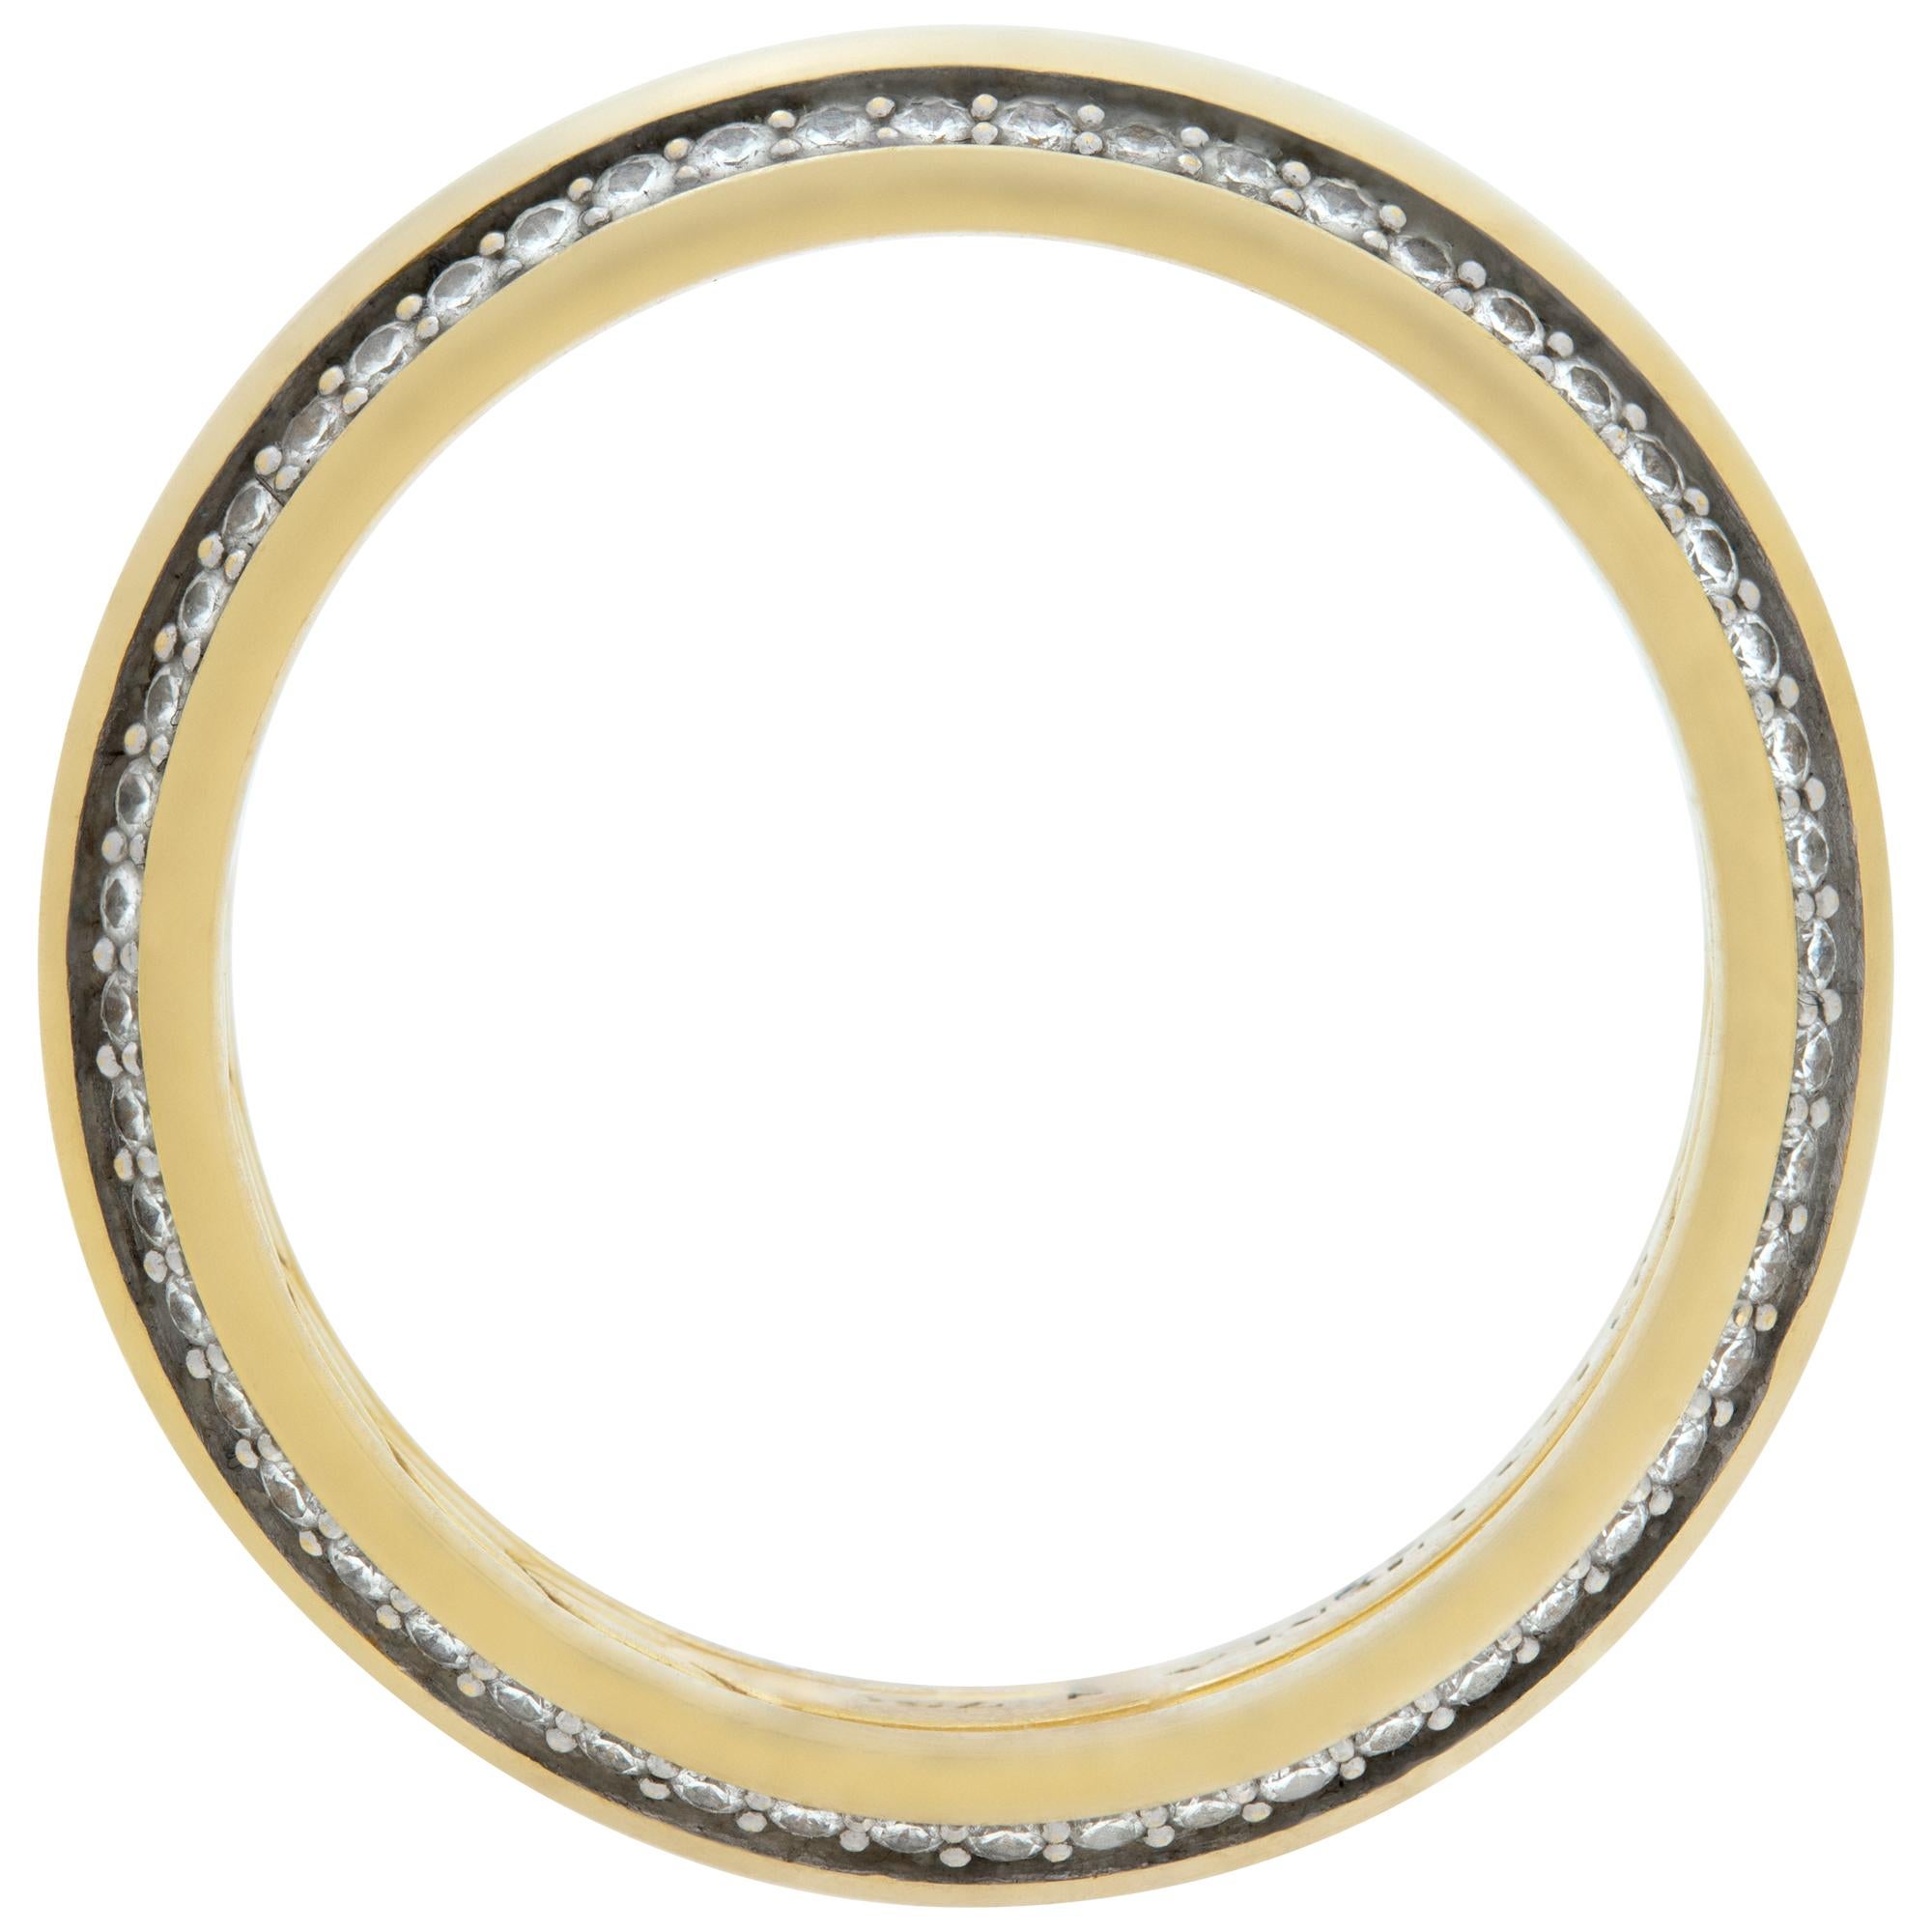 Men's David Yurman beveled band ring in yello gold with 0.67 carats in diamonds.